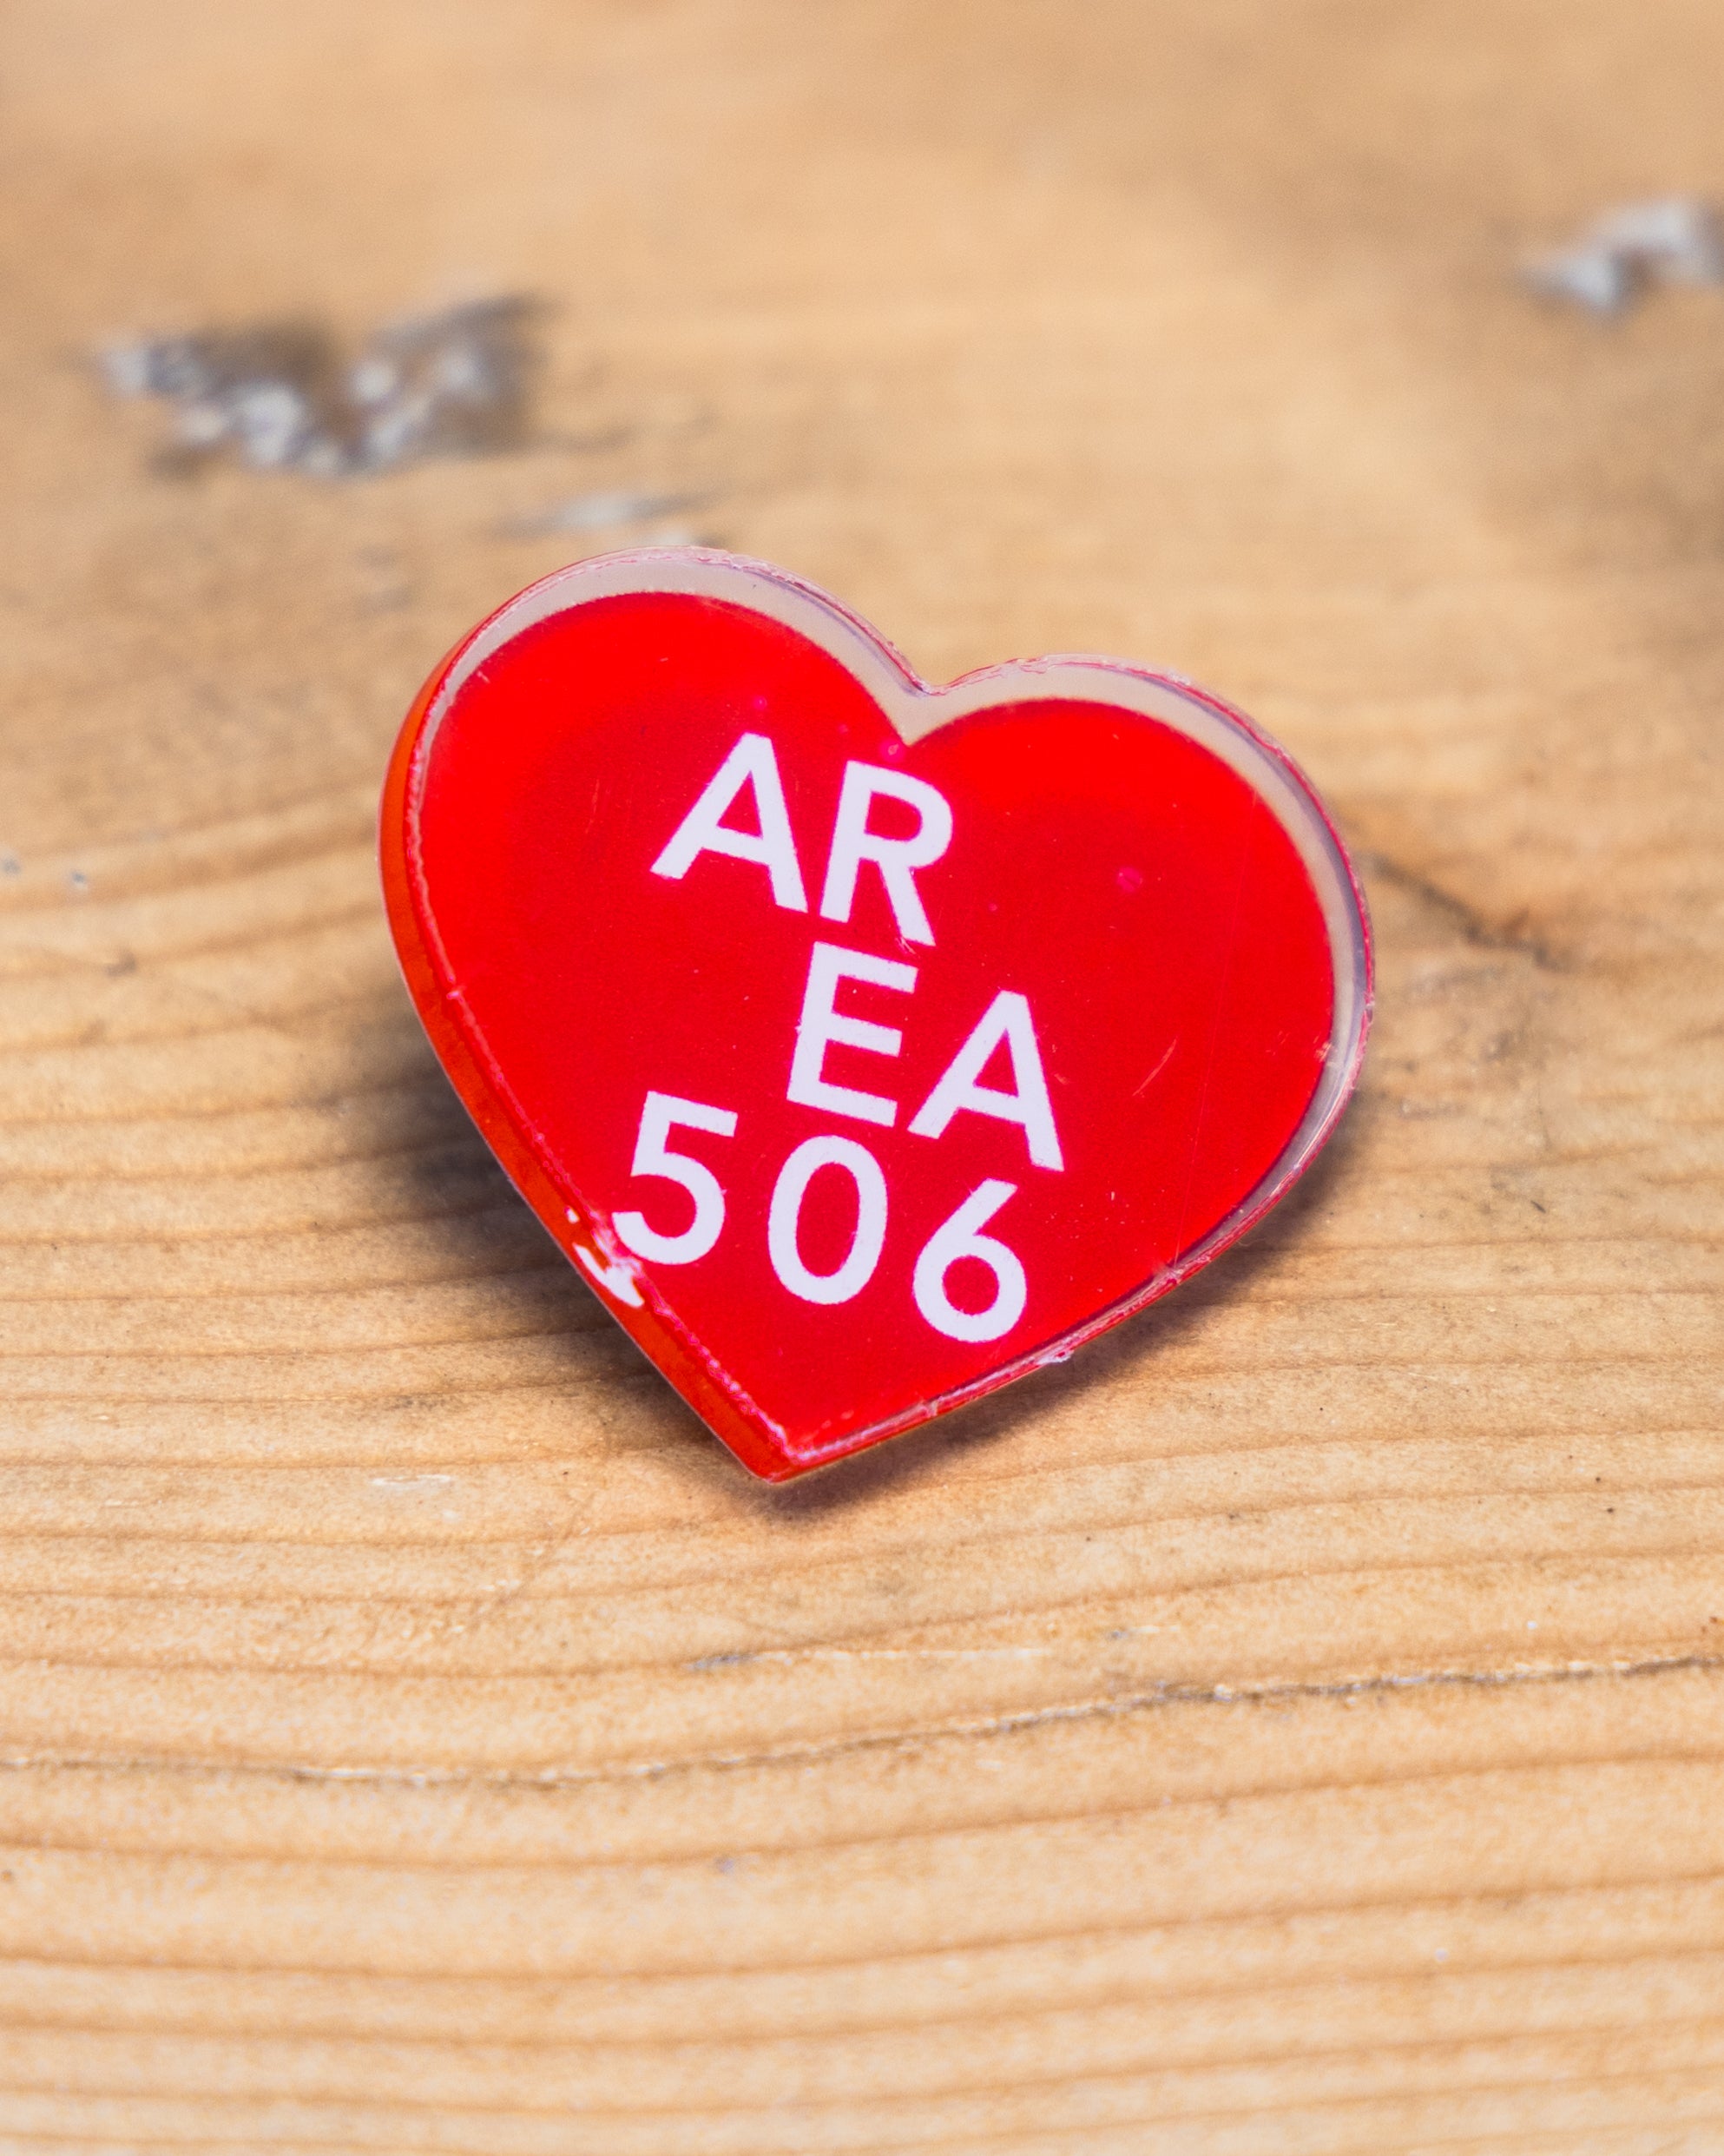 AREA 506 Pins